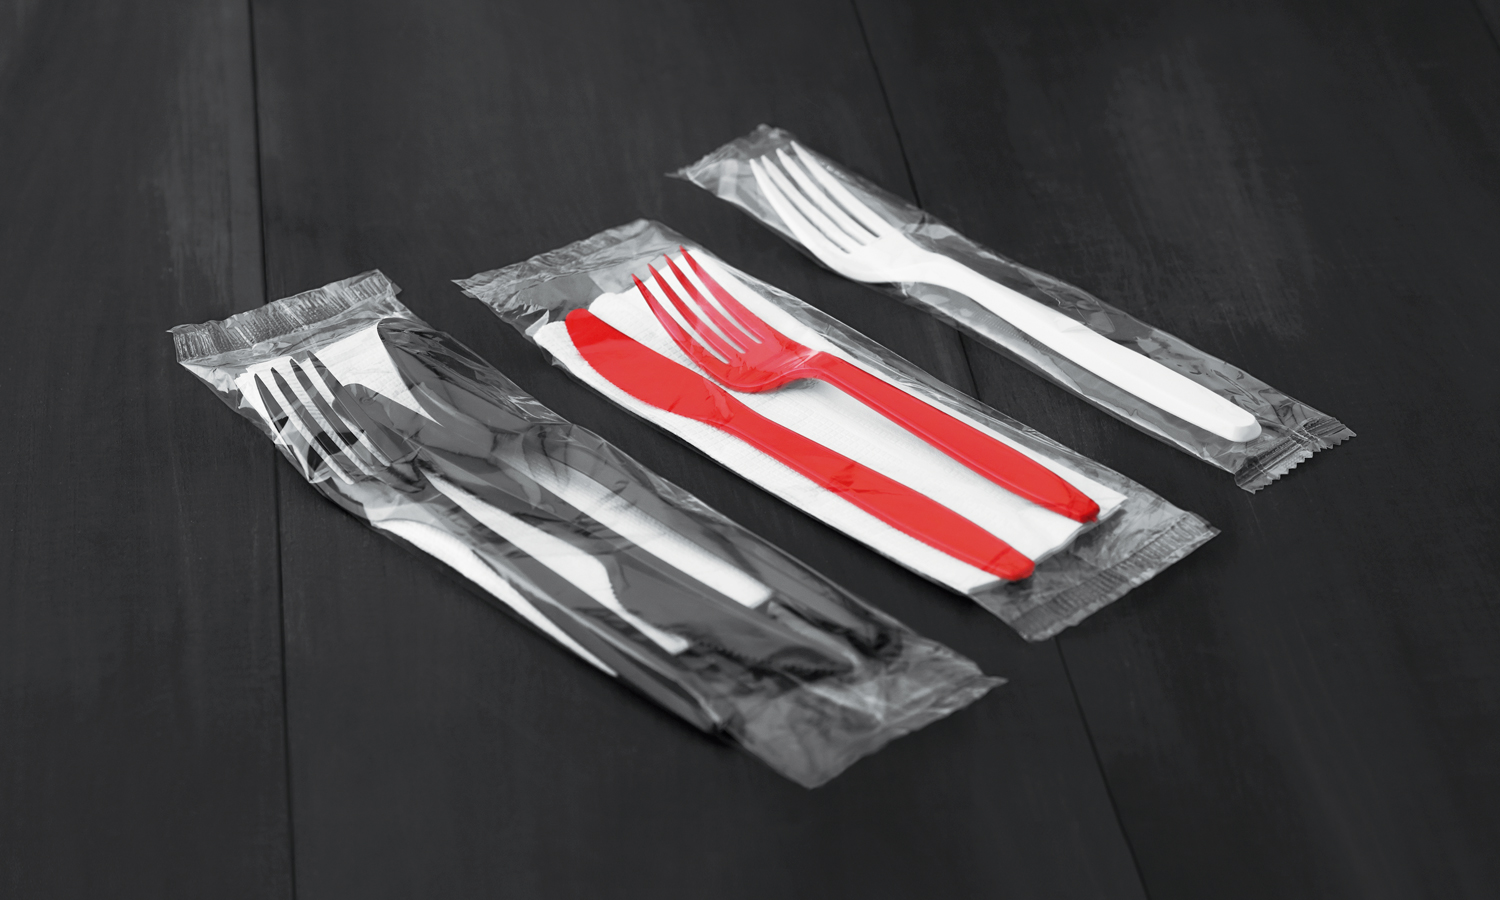 darnel-cutlery-sets